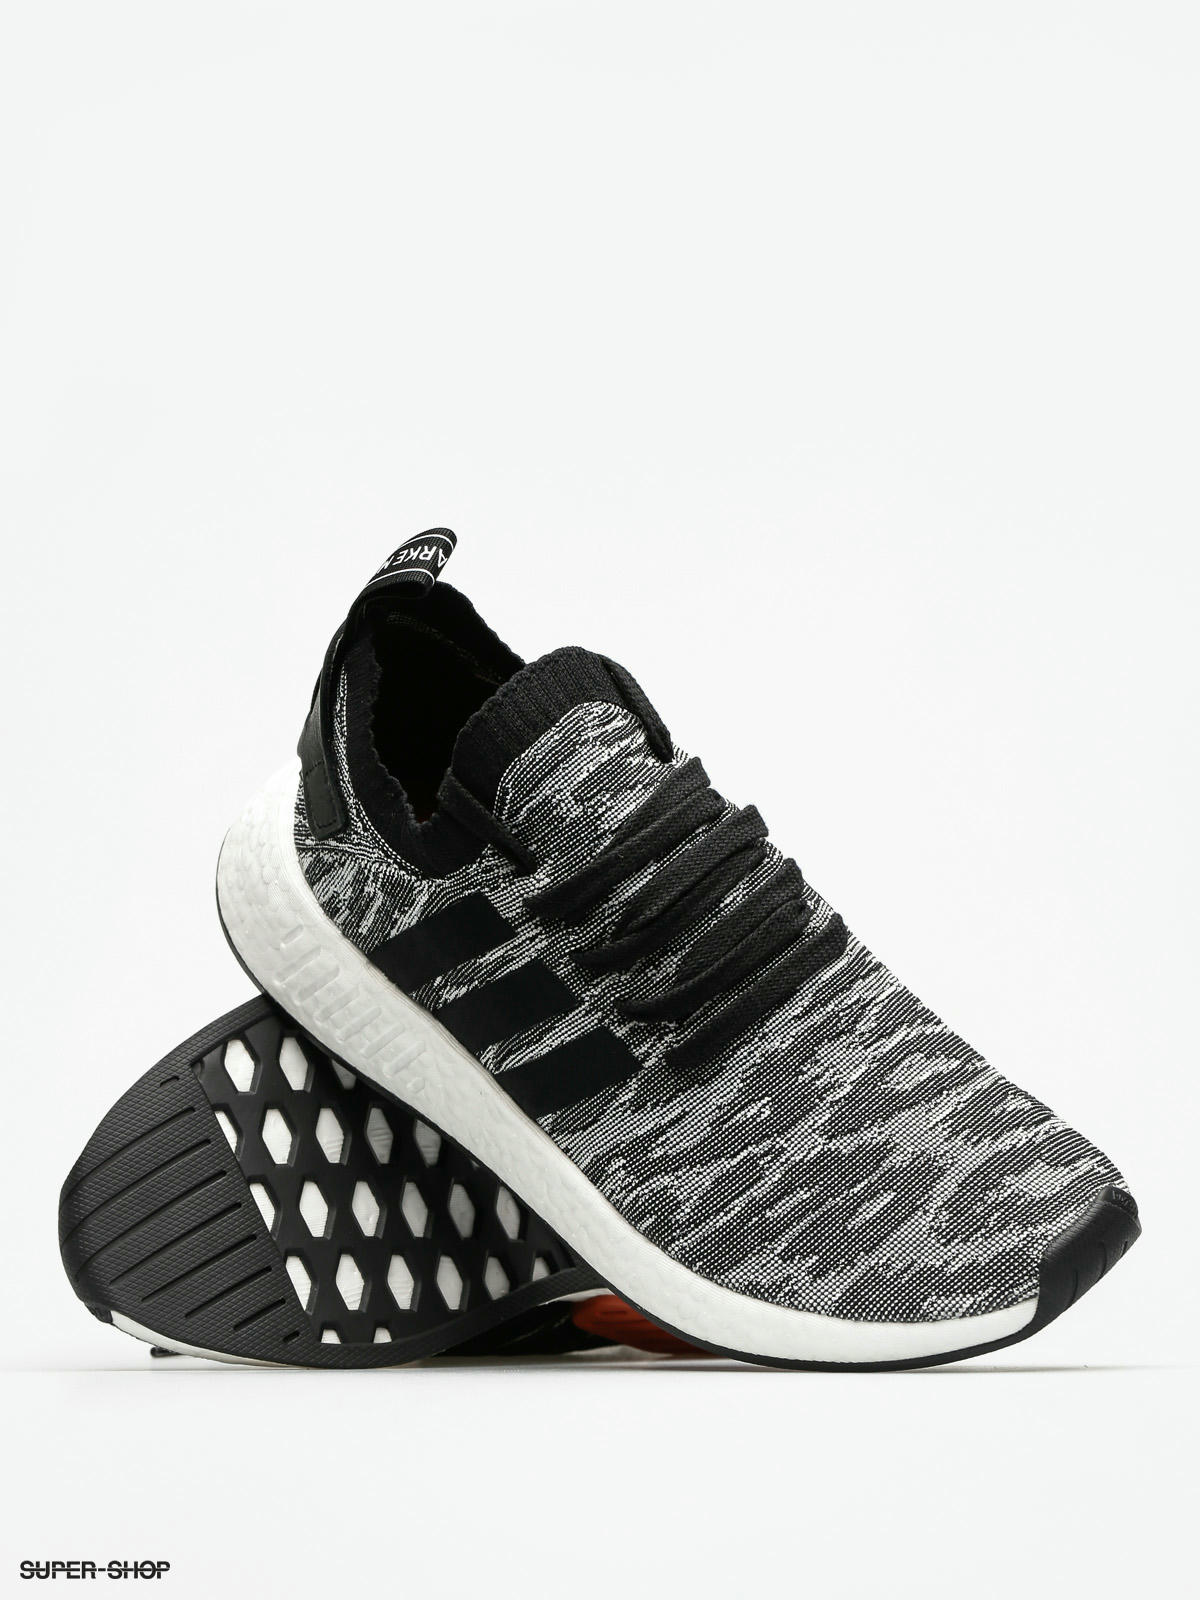 Adidas NMD R2 Pk Black Grey